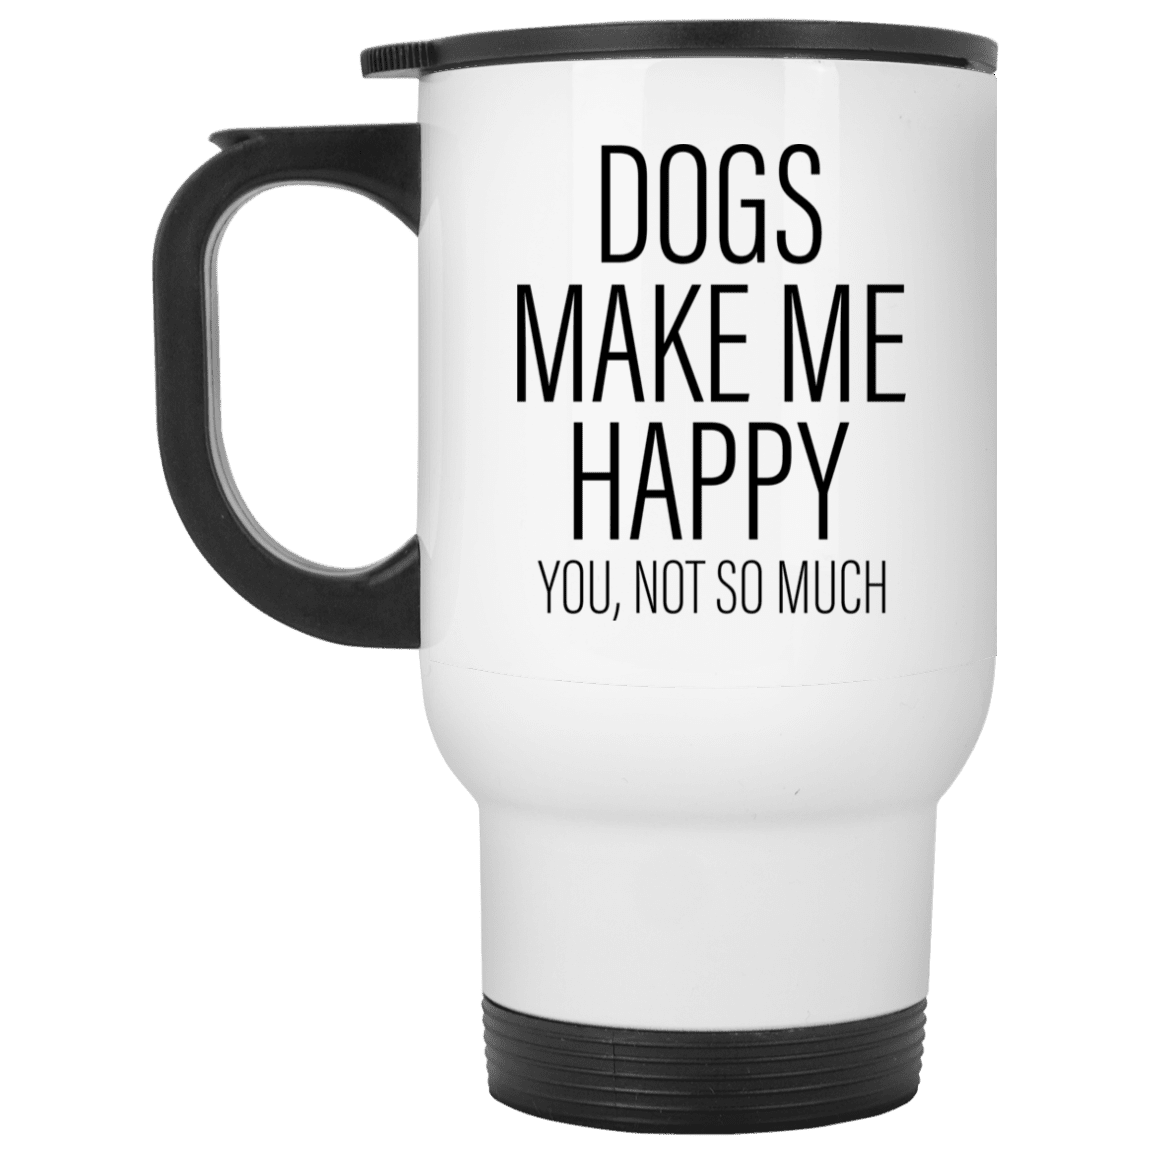 Dogs Make Me Happy - Mugs.